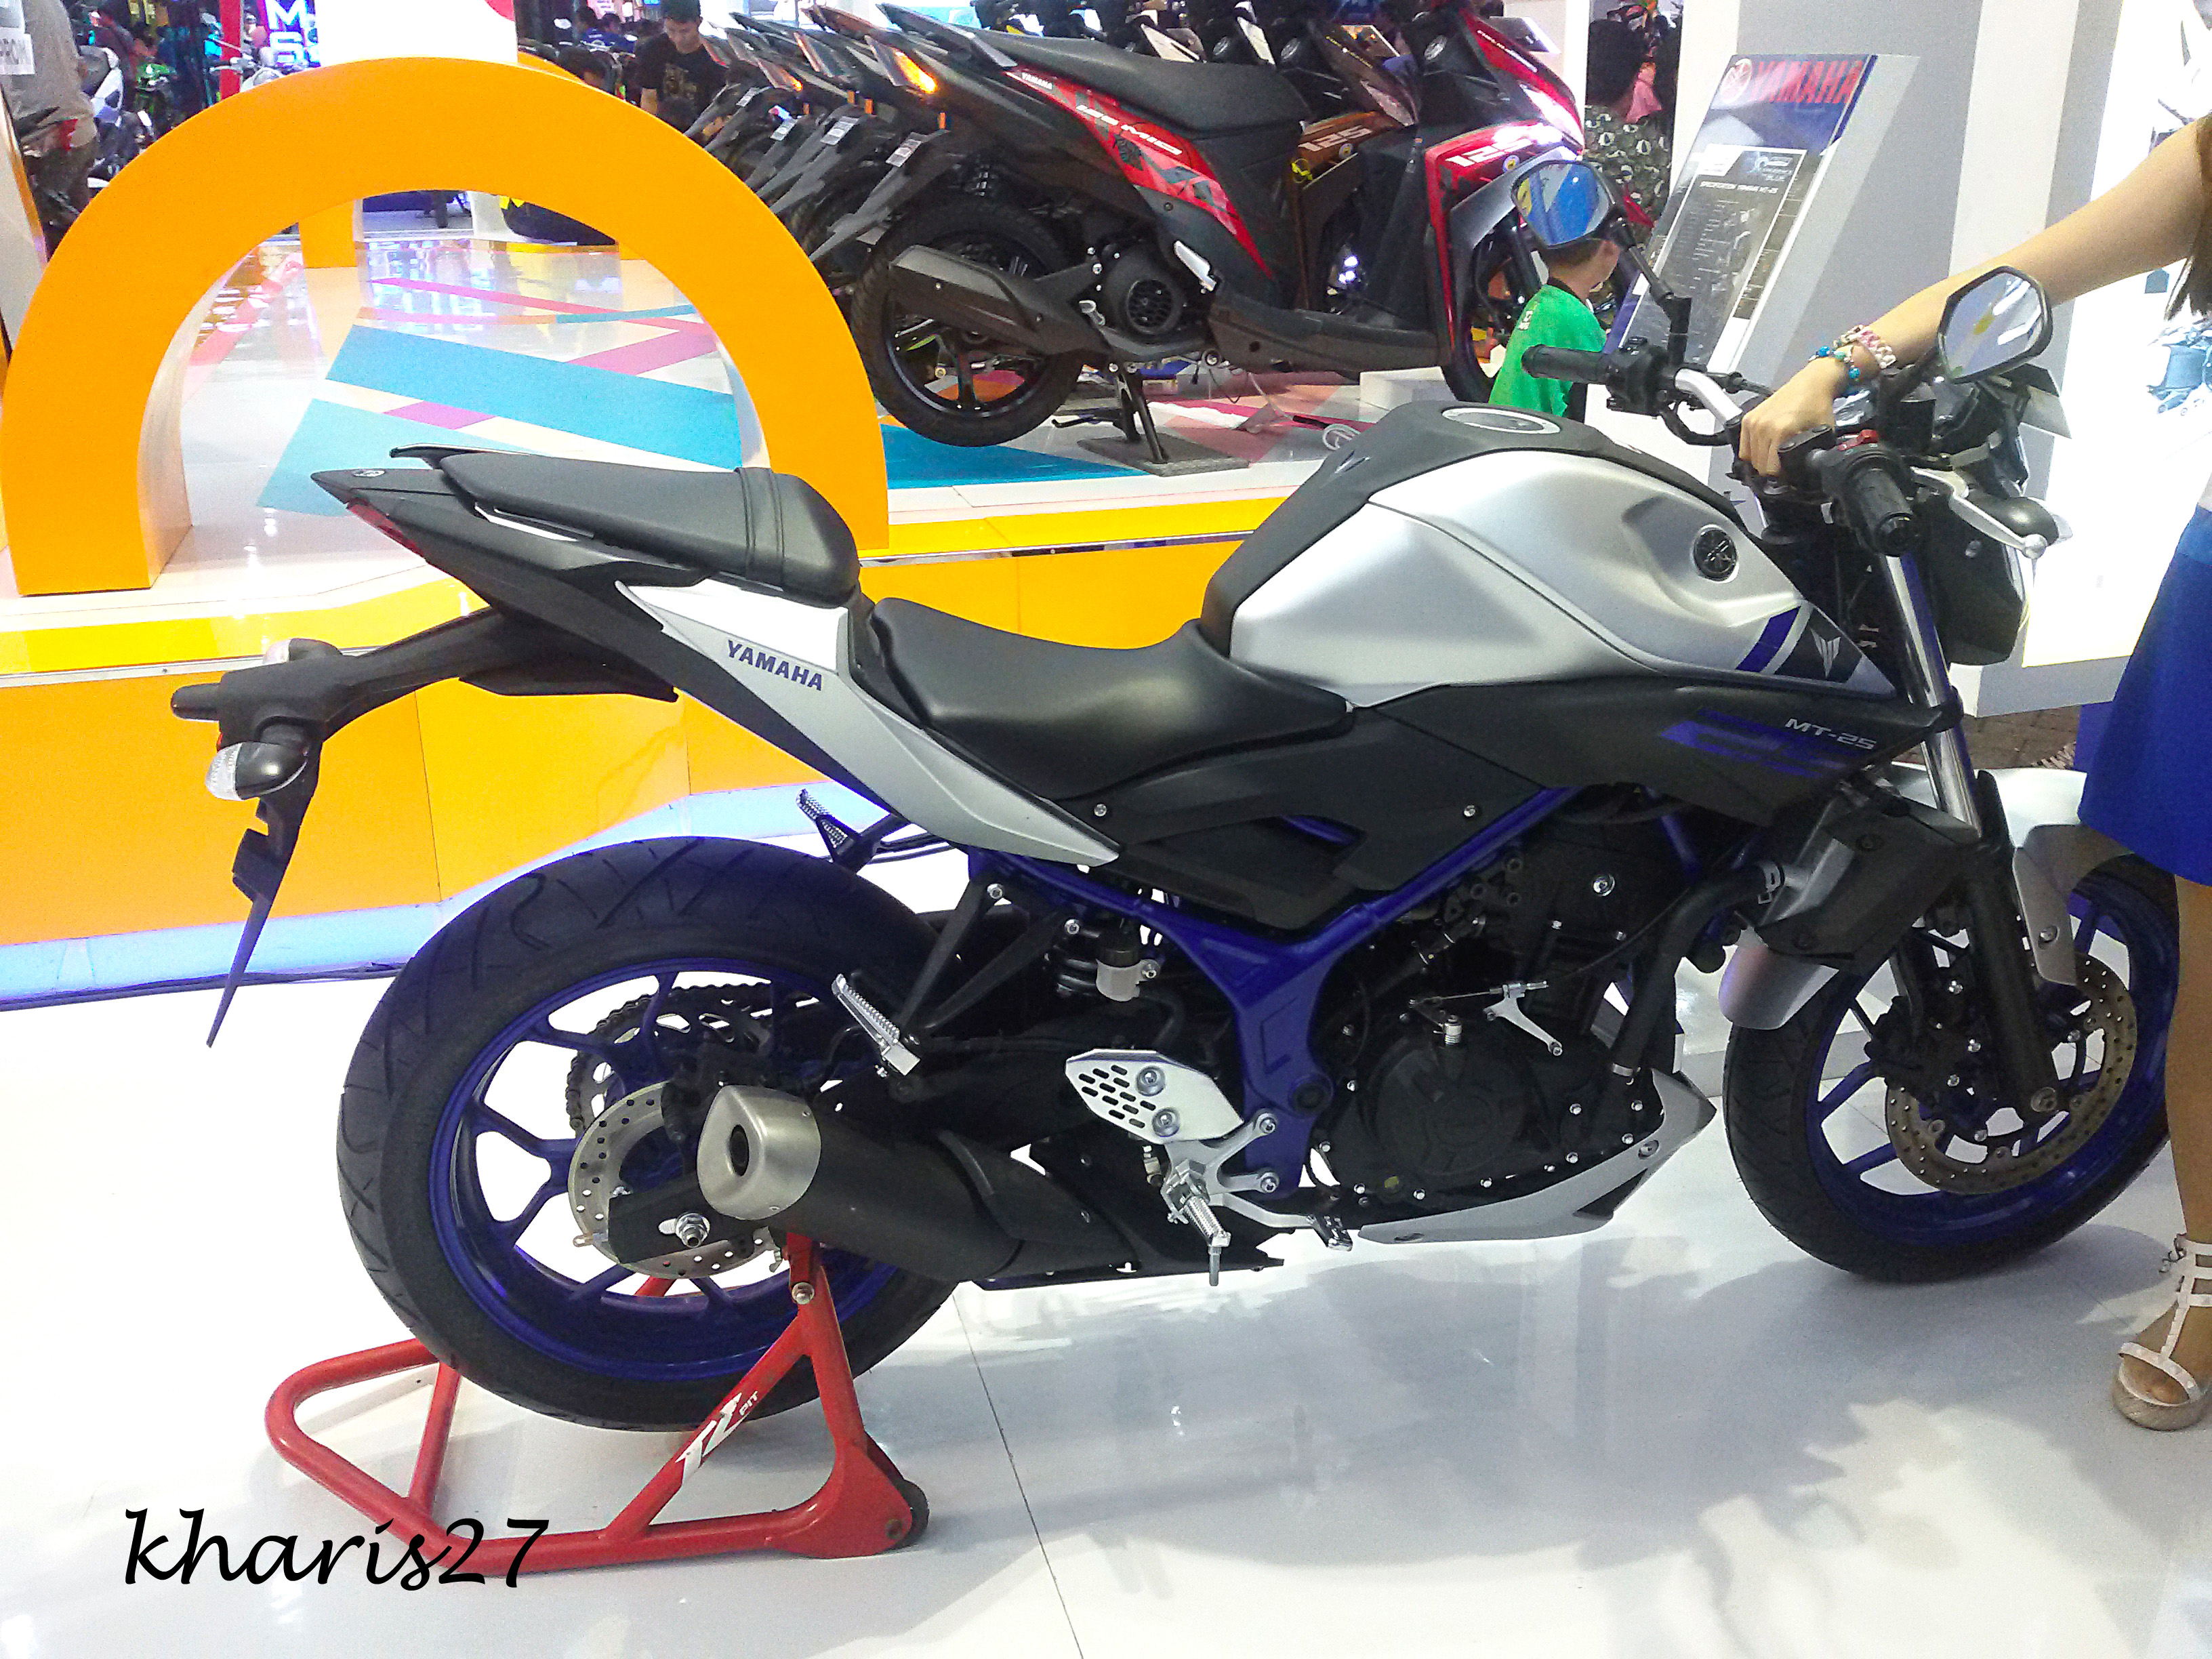 Kharis27 PRJ 2015 Ngeliat Yamaha MT25 Bagus Sih Tapi Kharis27